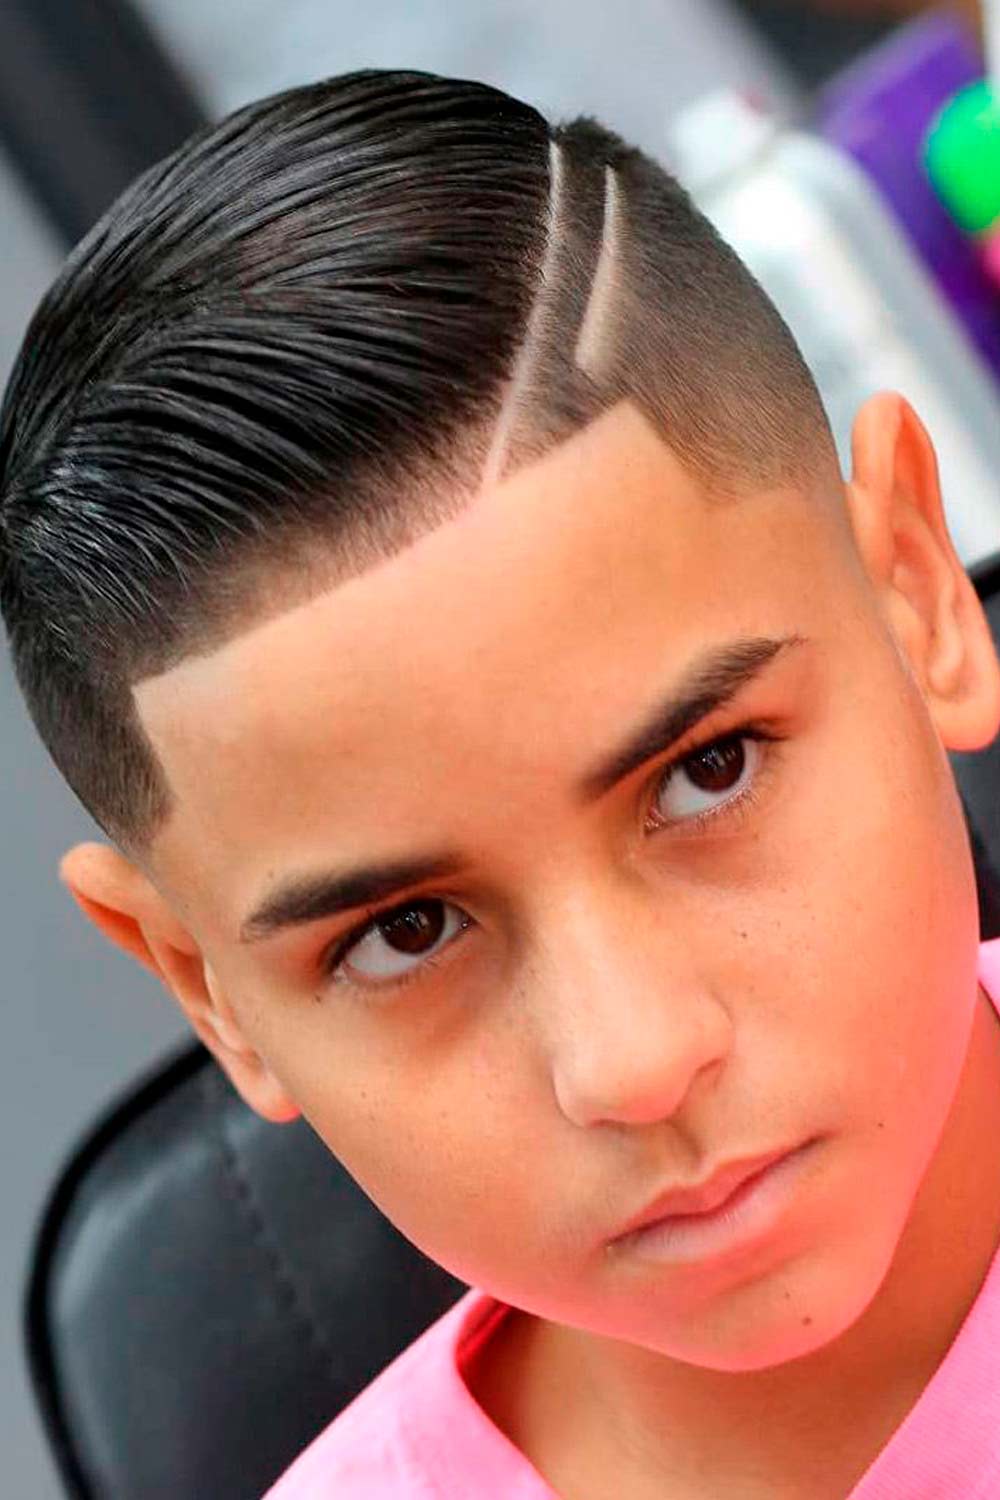 46,901 Boy Haircut Images, Stock Photos & Vectors | Shutterstock